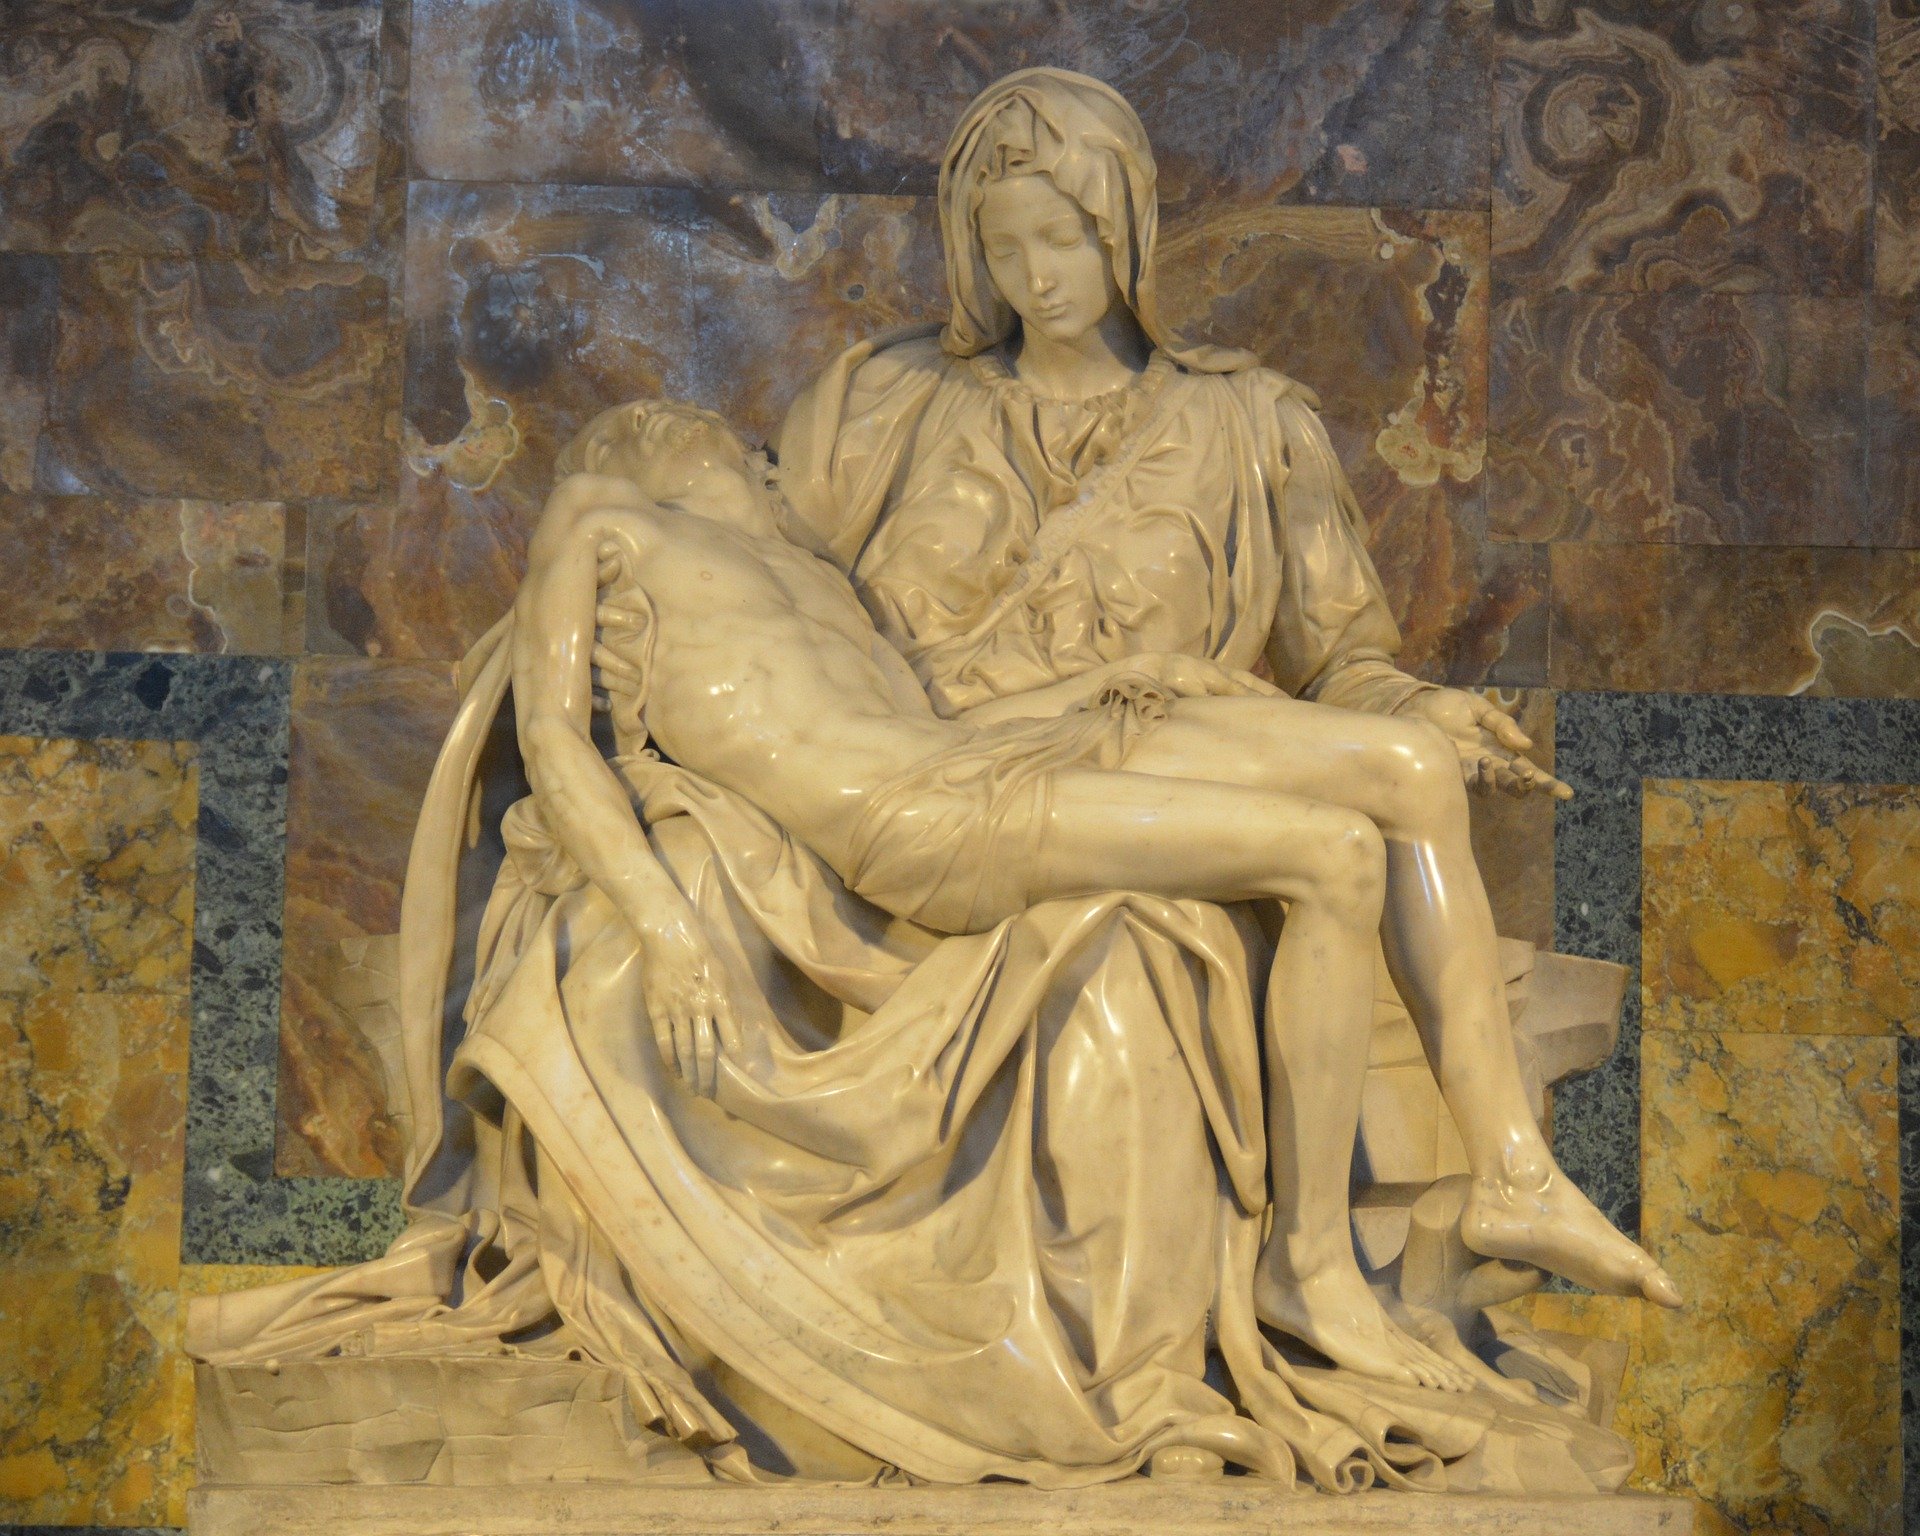 Pieta statue by Michelangelo in Italy